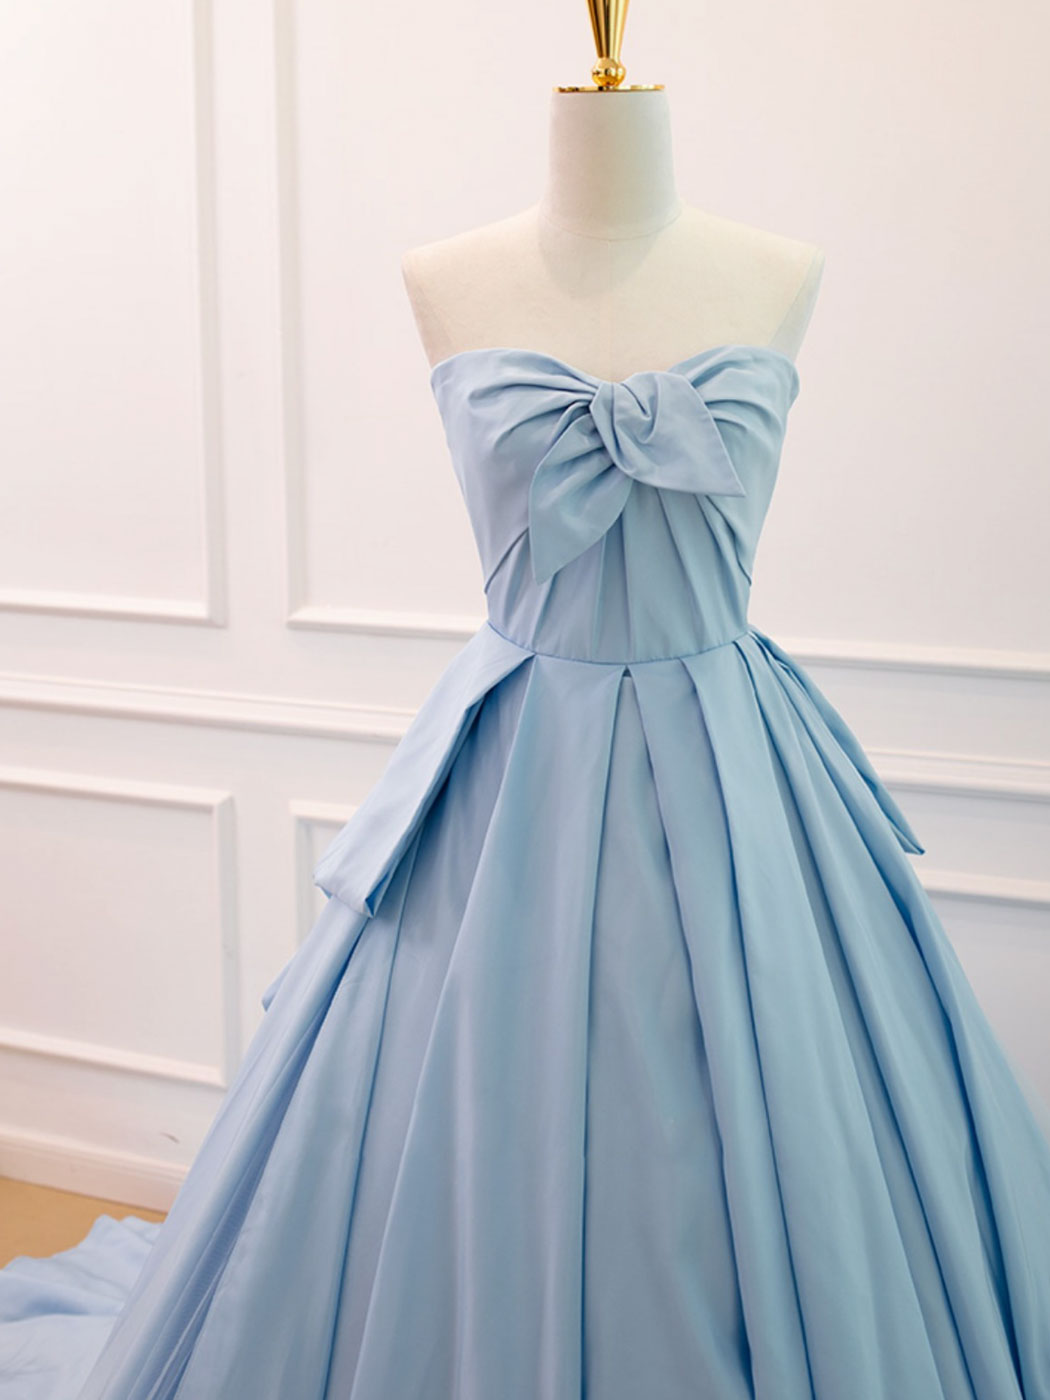 Dress Design, A-Line Sweetheart Neck Satin Tulle Blue Long Prom Dress, Blue Evening Dress